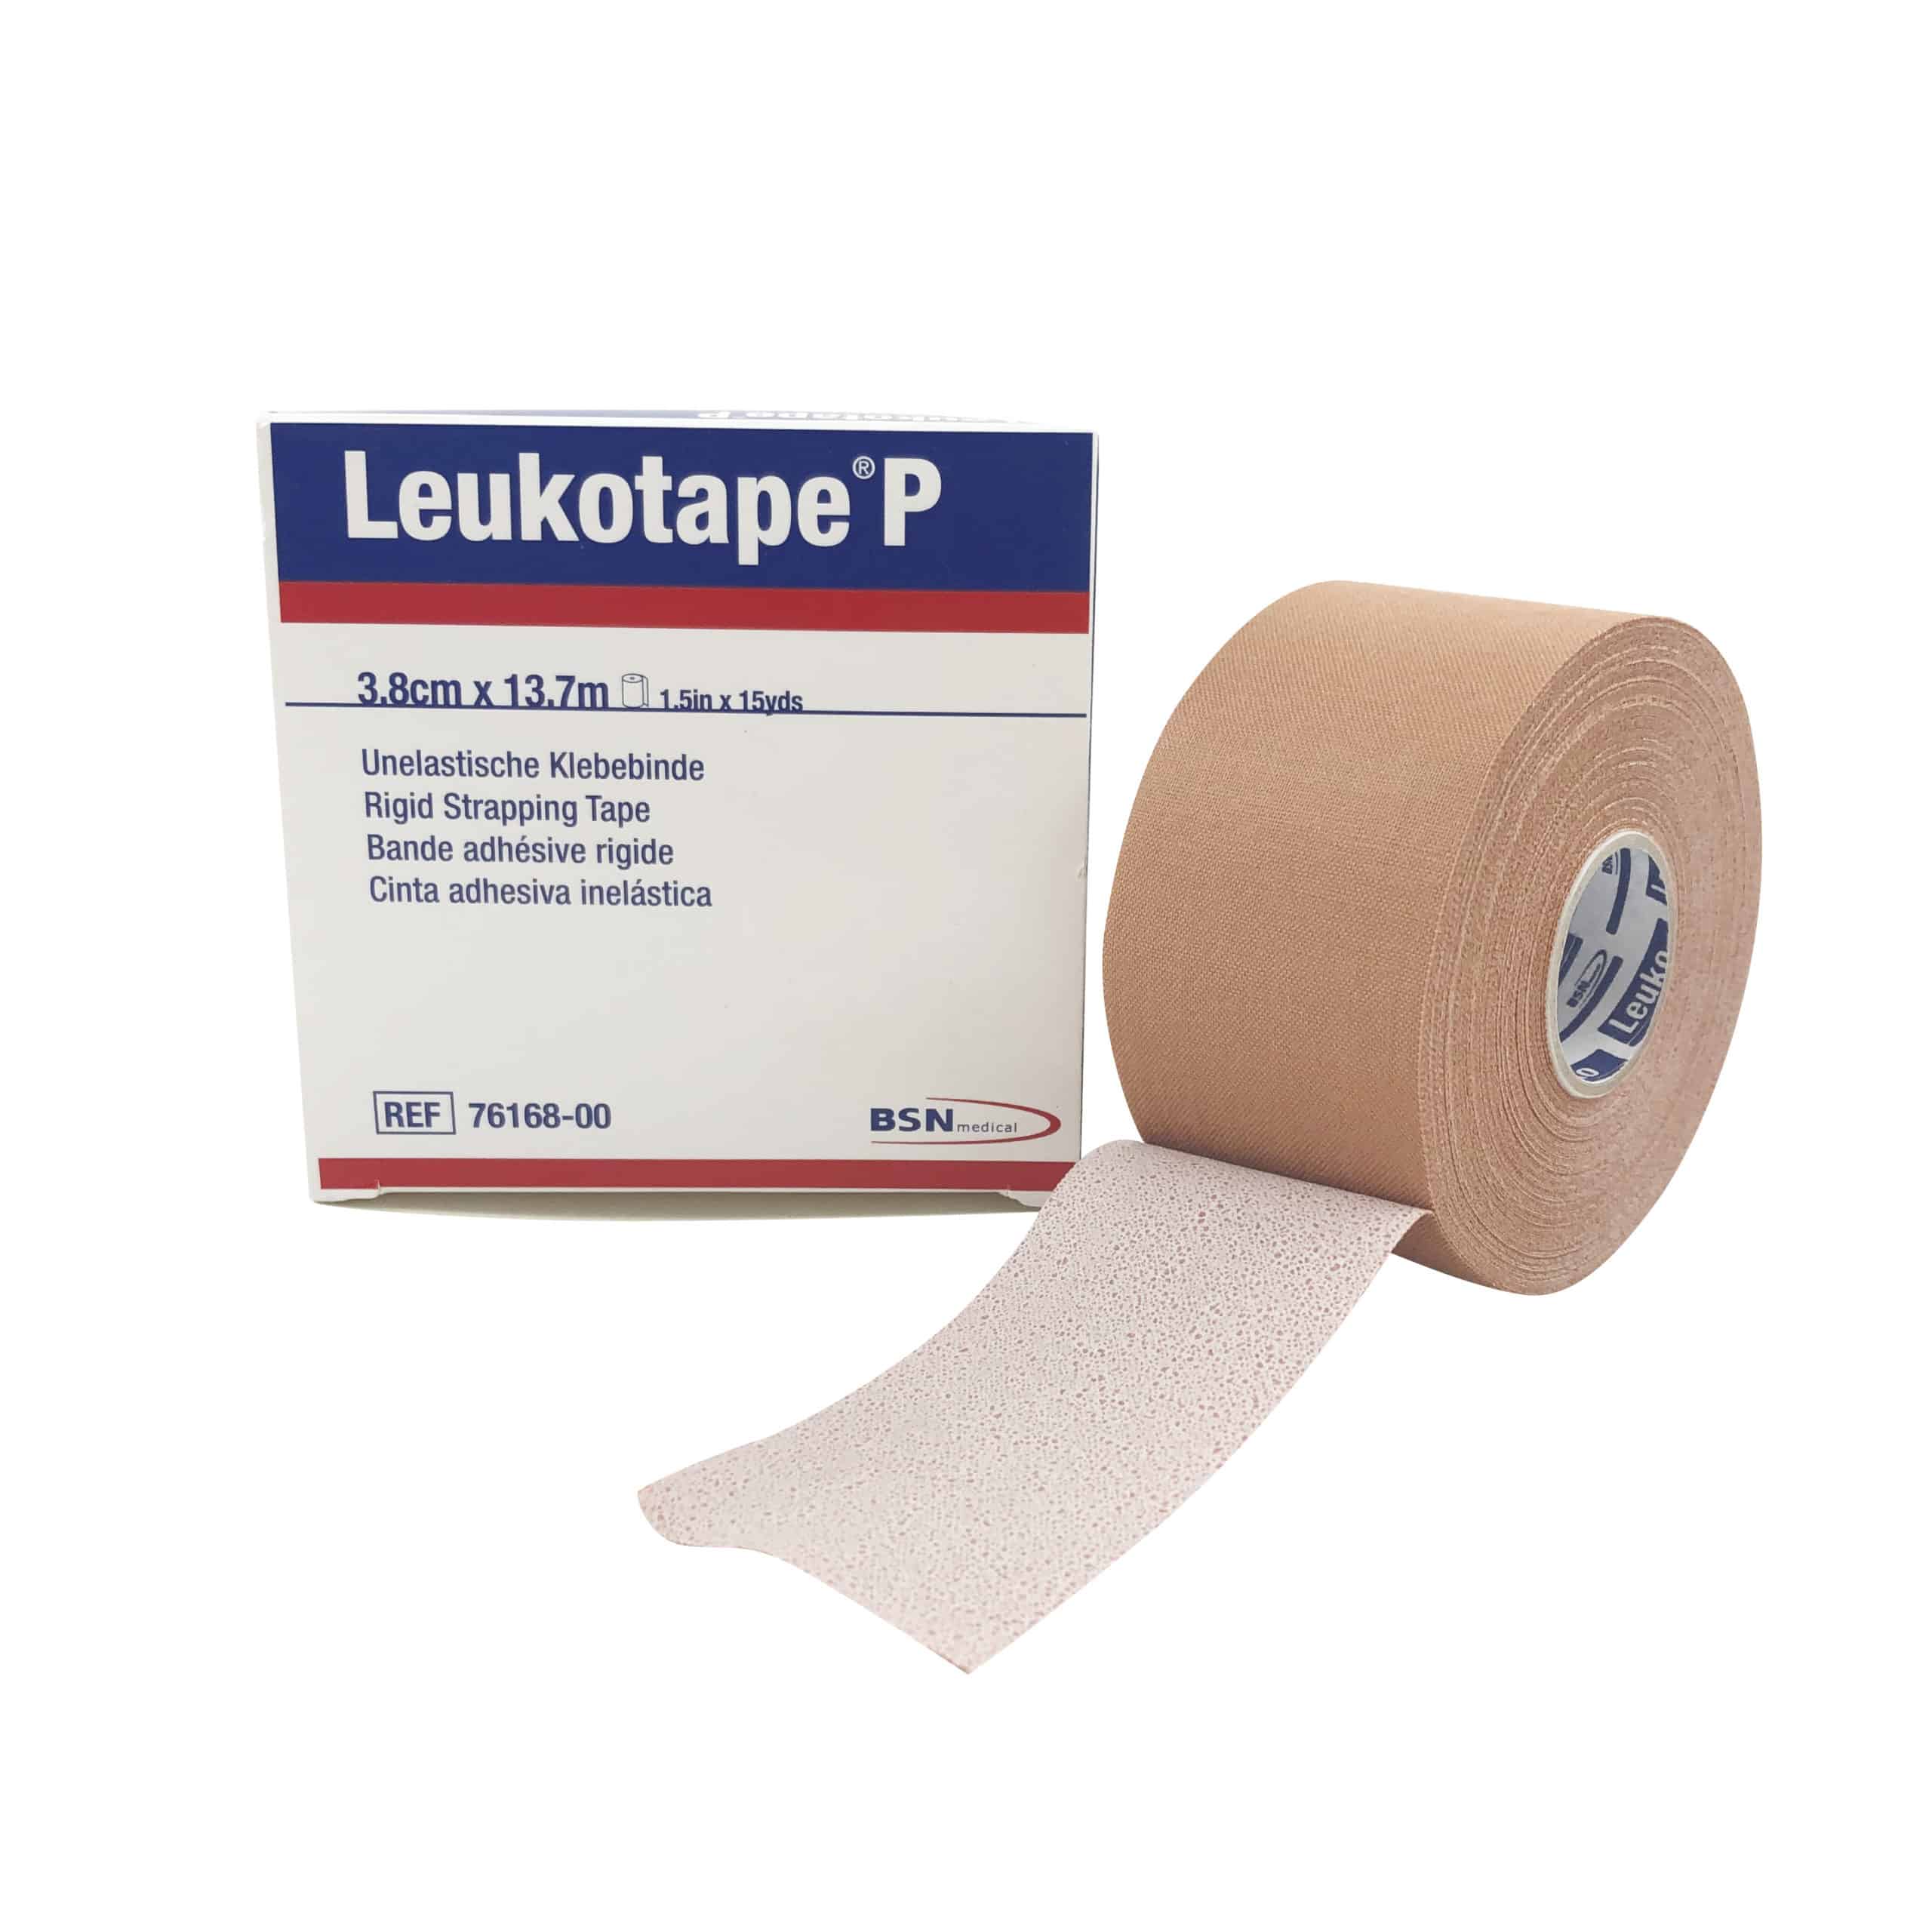 Leukotape® P - High Adhesive Rigid Tape For Sale